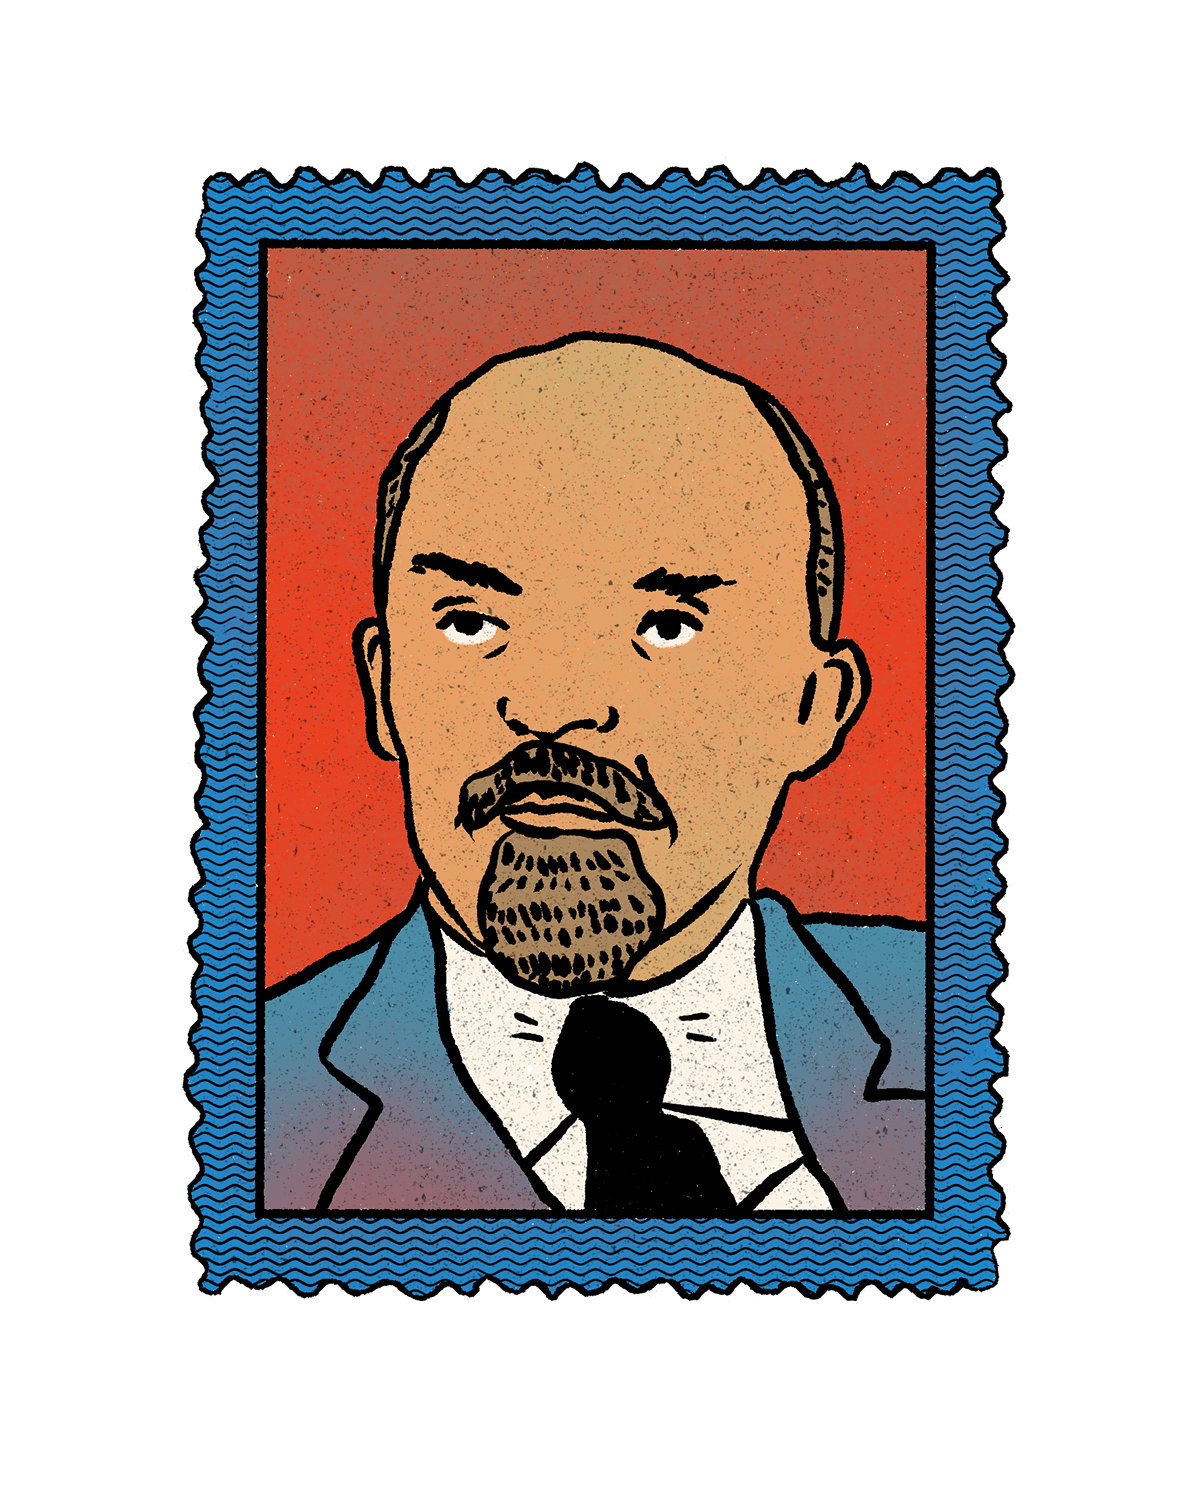 Lenin jacobin magazine